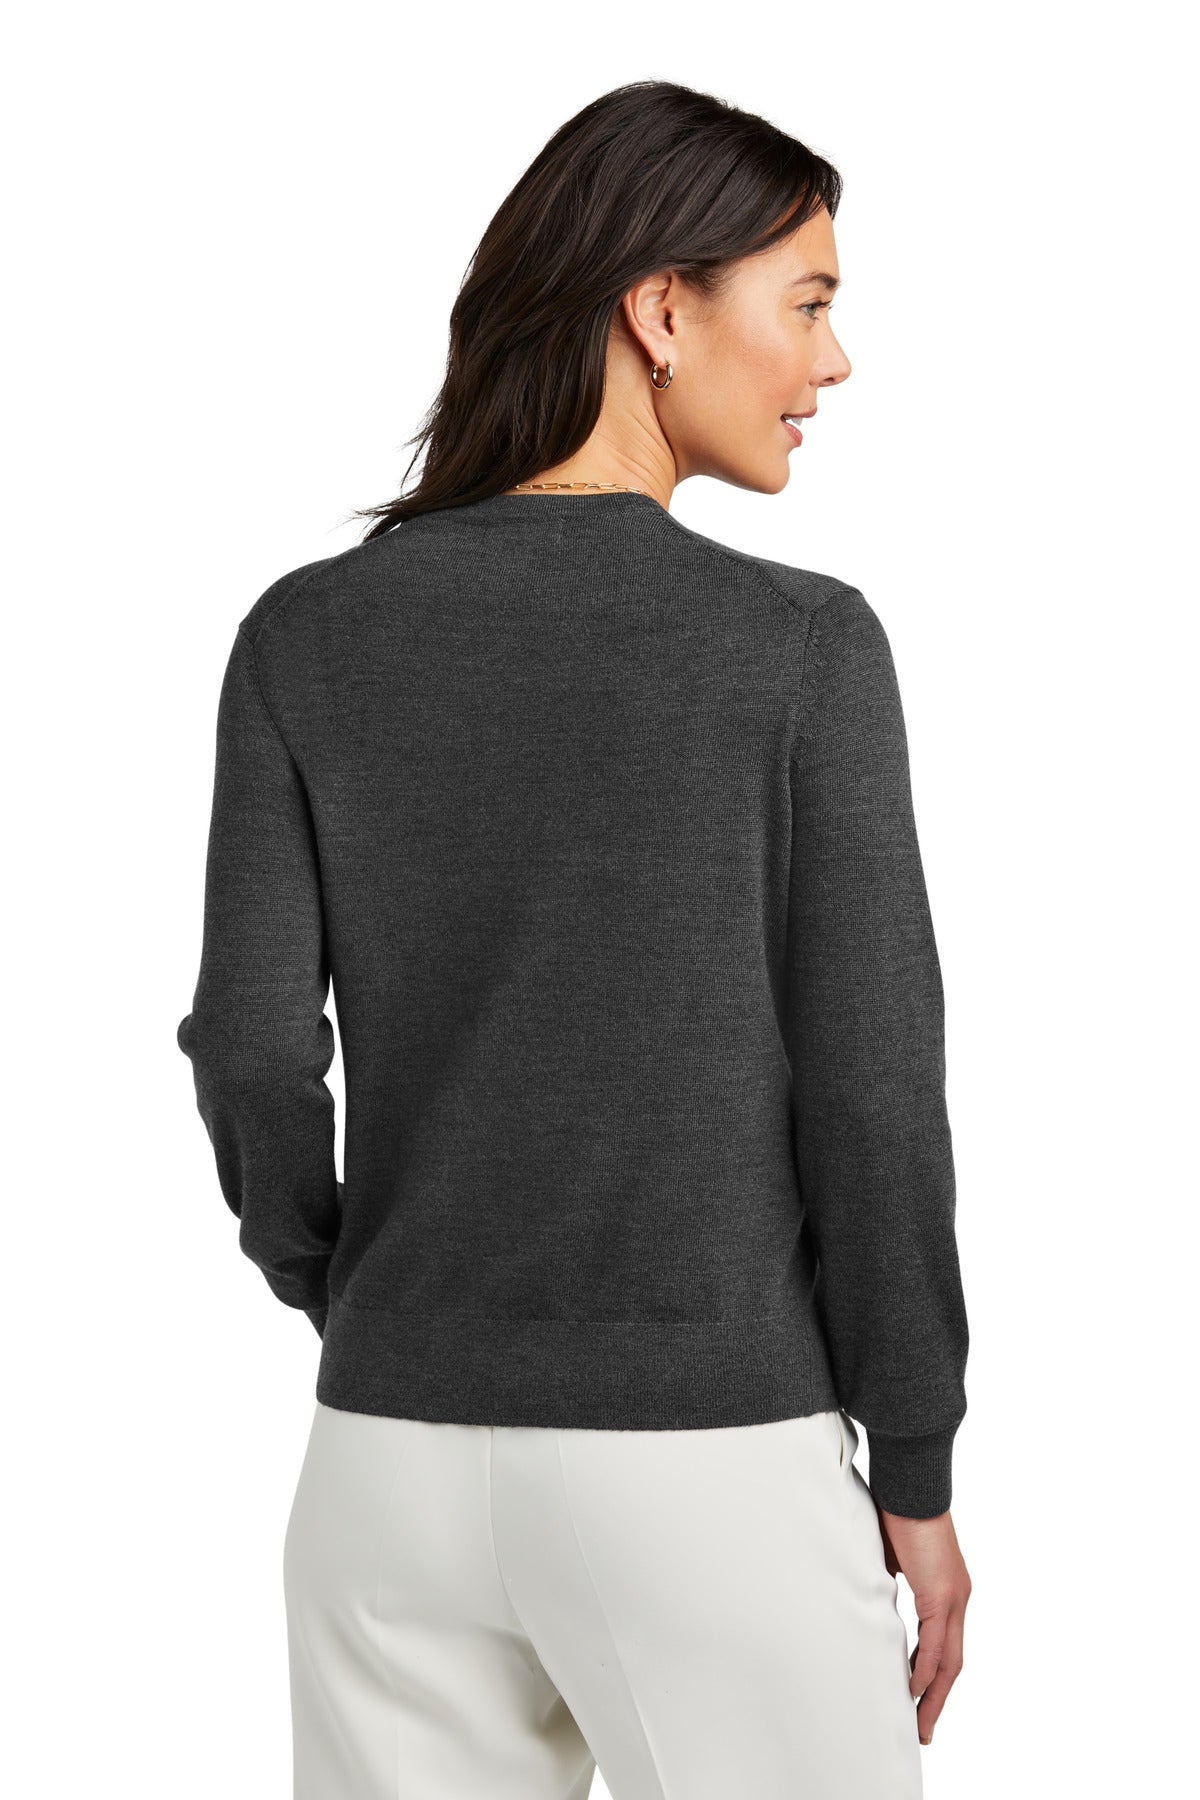 Brooks Brothers Women's Washable Merino Cardigan Sweater BB18413